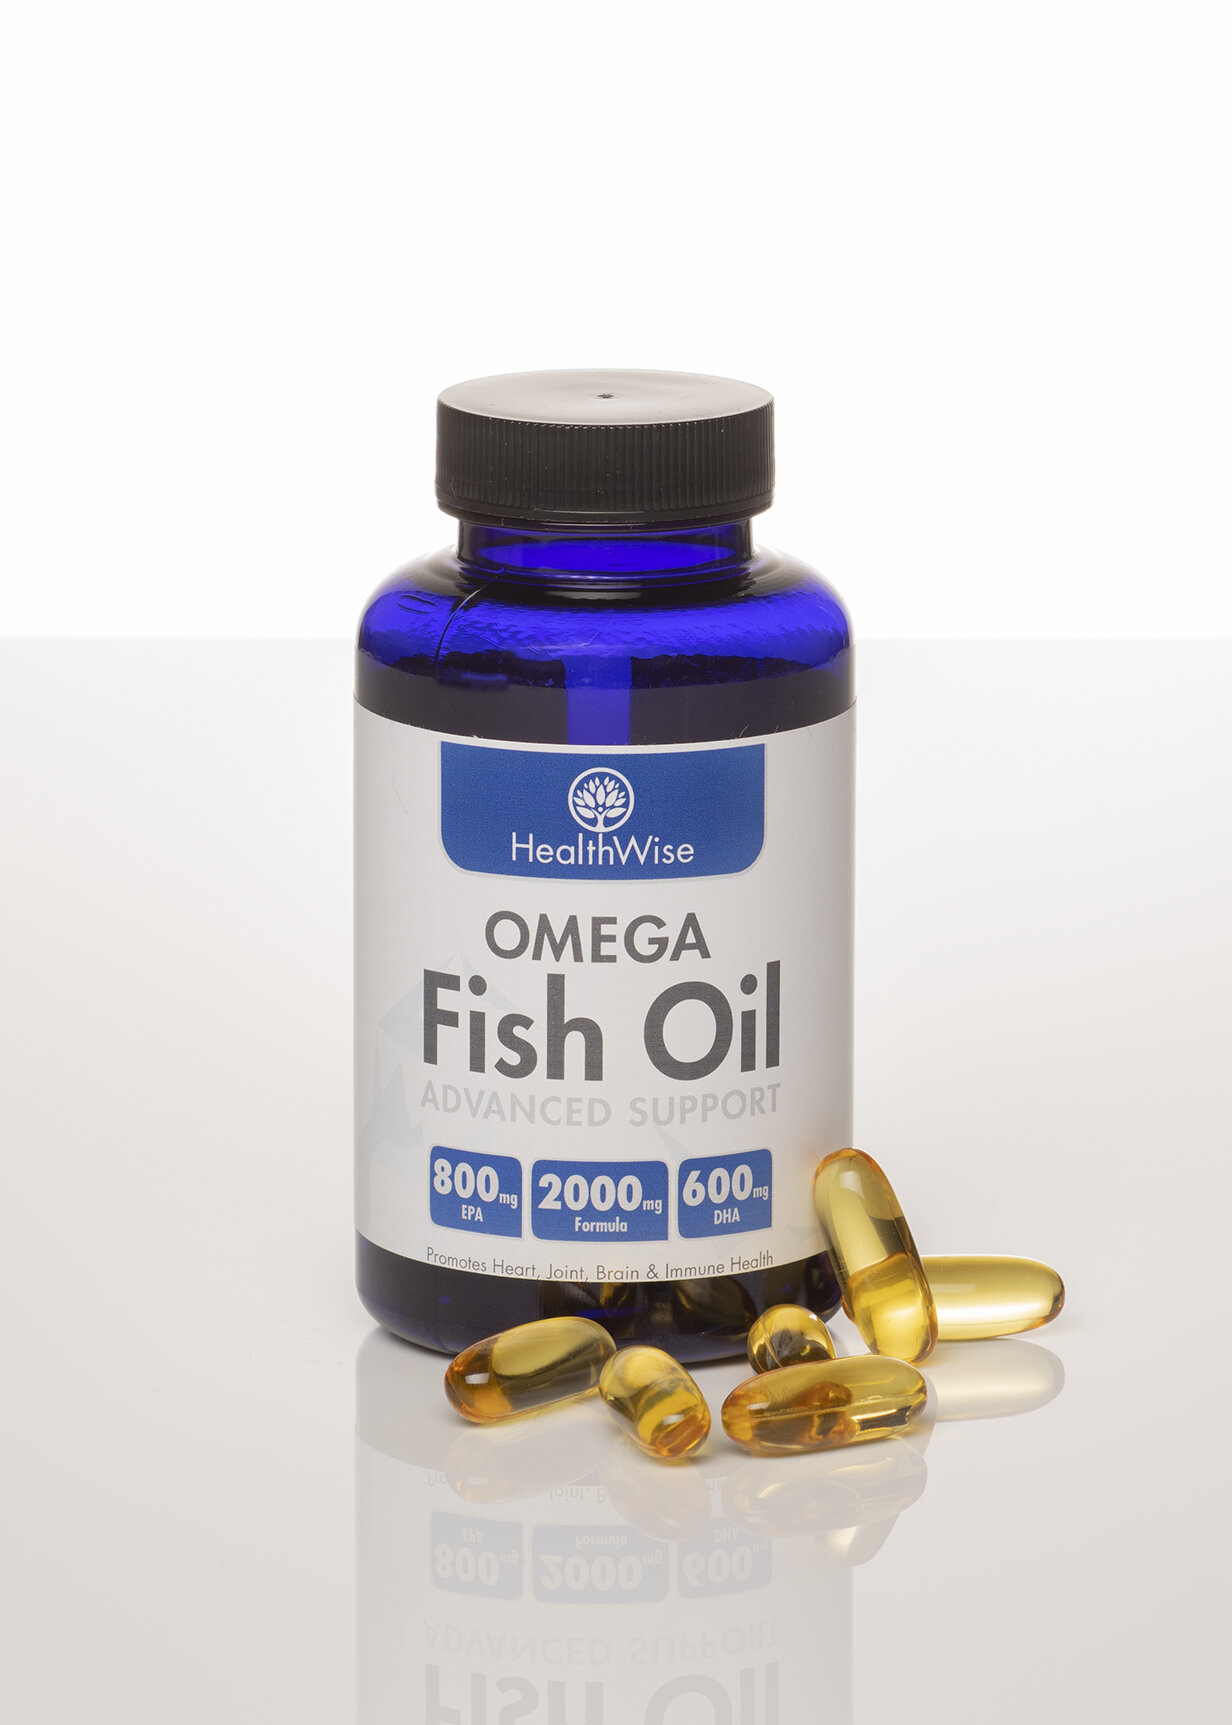 20201013 Healthwise Fish Oil0620-2.jpg